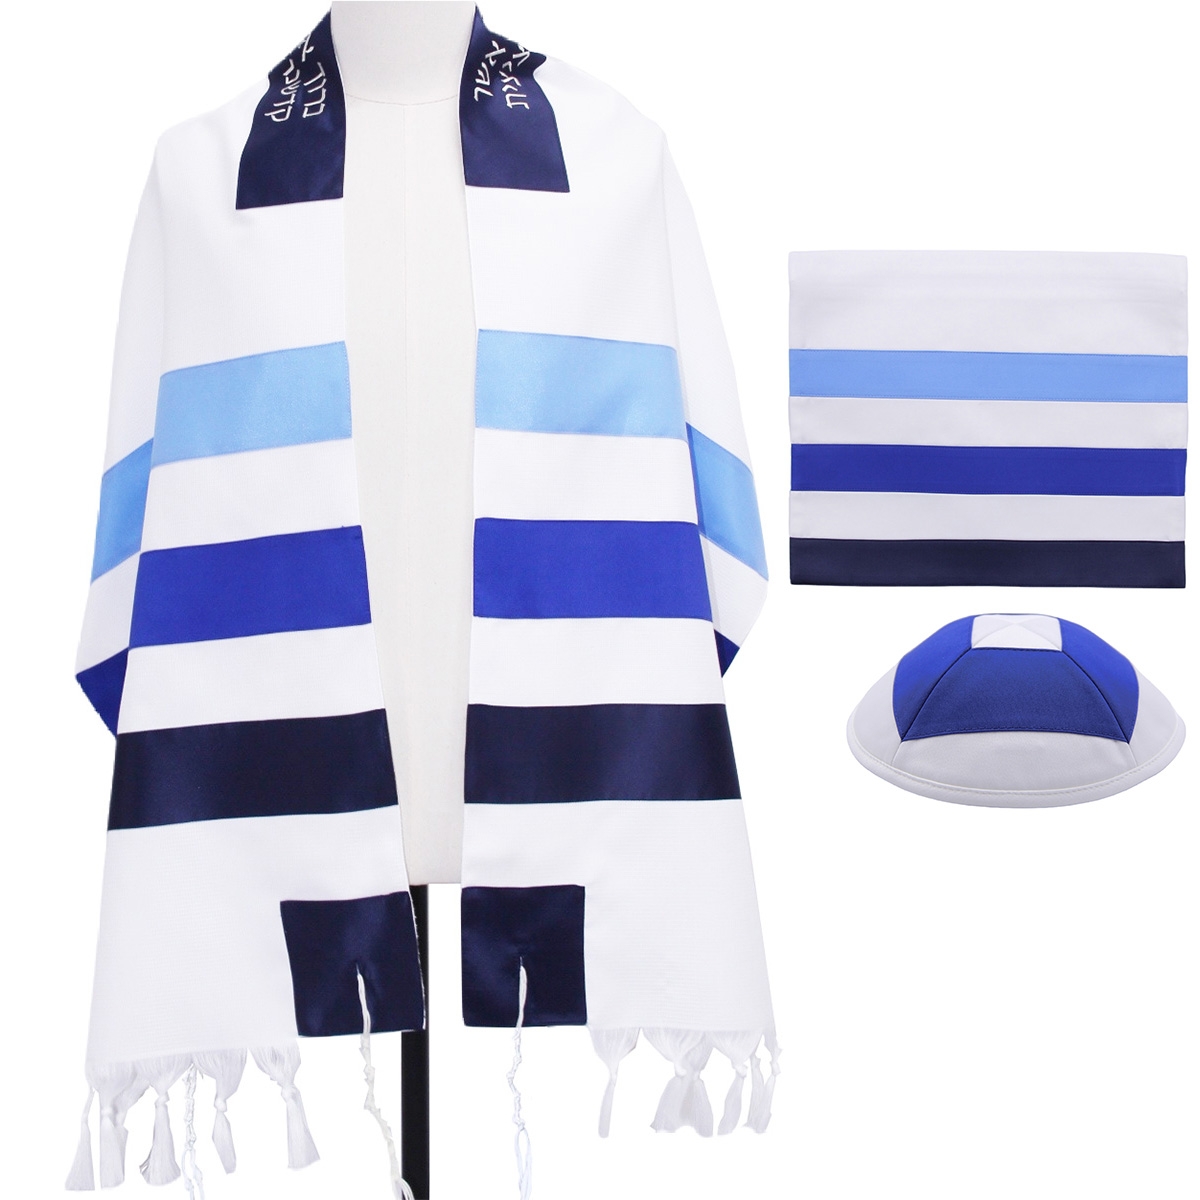 Super Acrylic Shabbat Tallit - Blue Stripes - With Kippah and Bag - 5